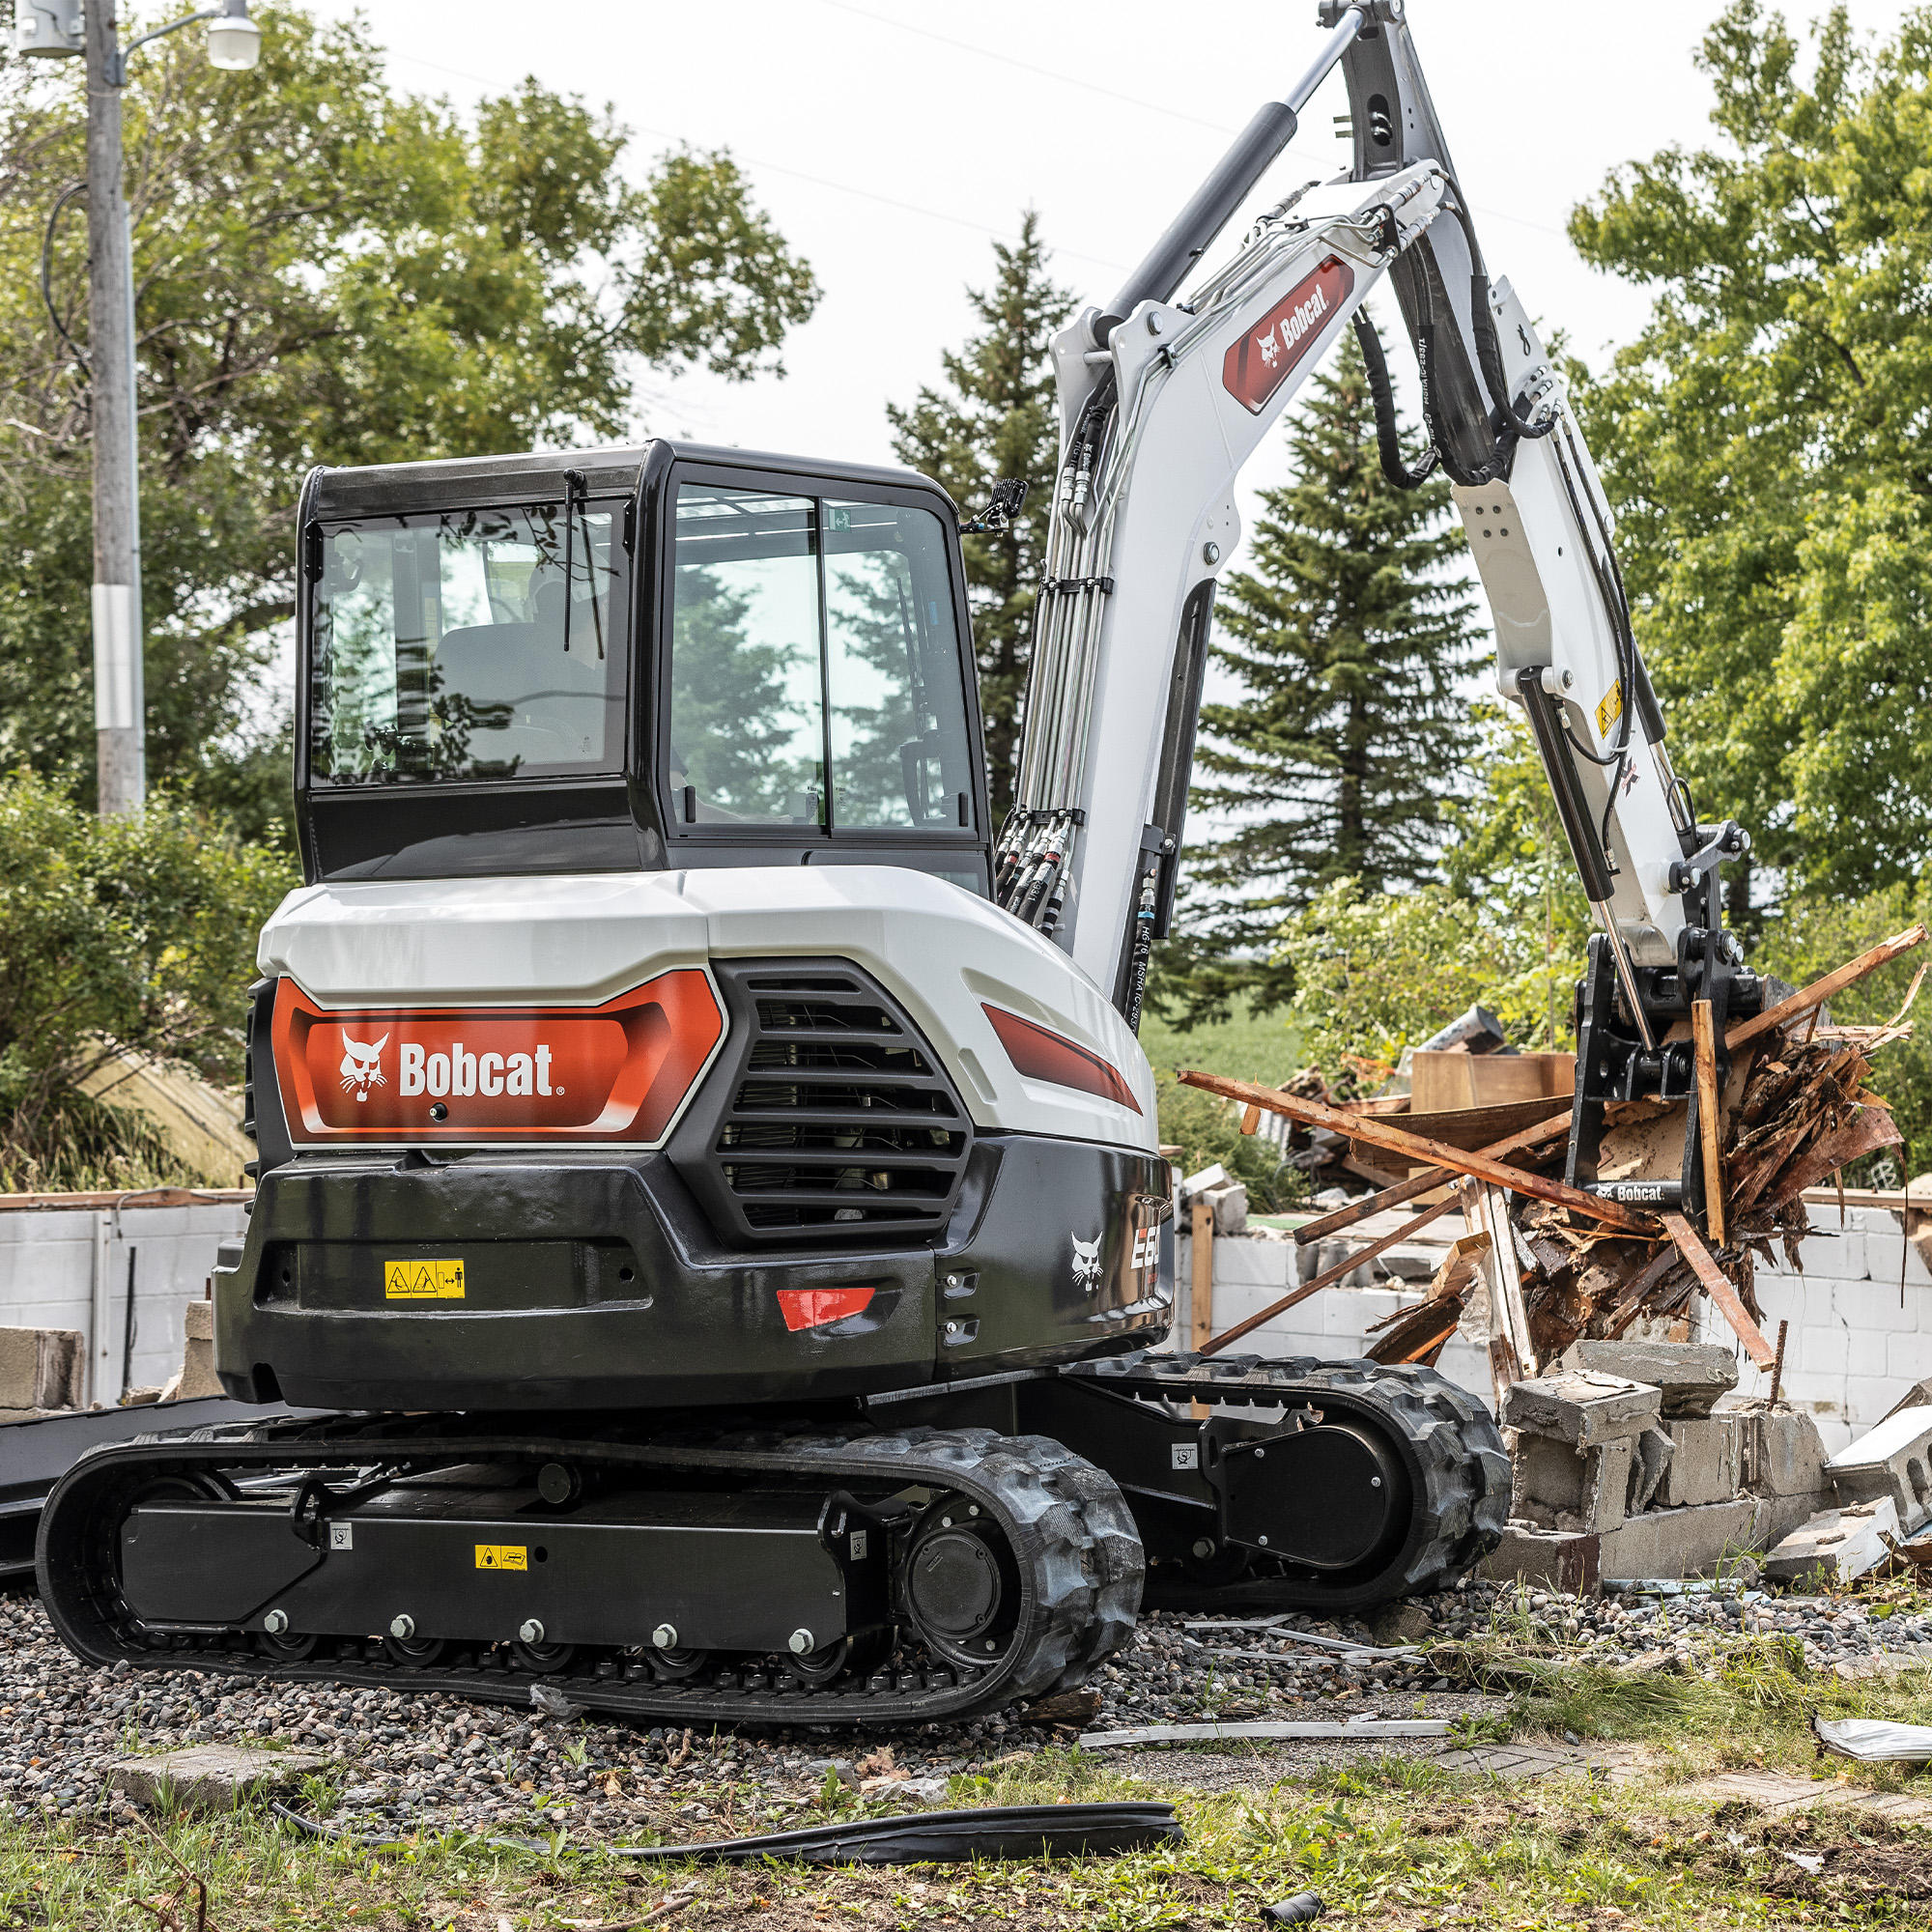 Bobcat E60 compact excavator performing demolition